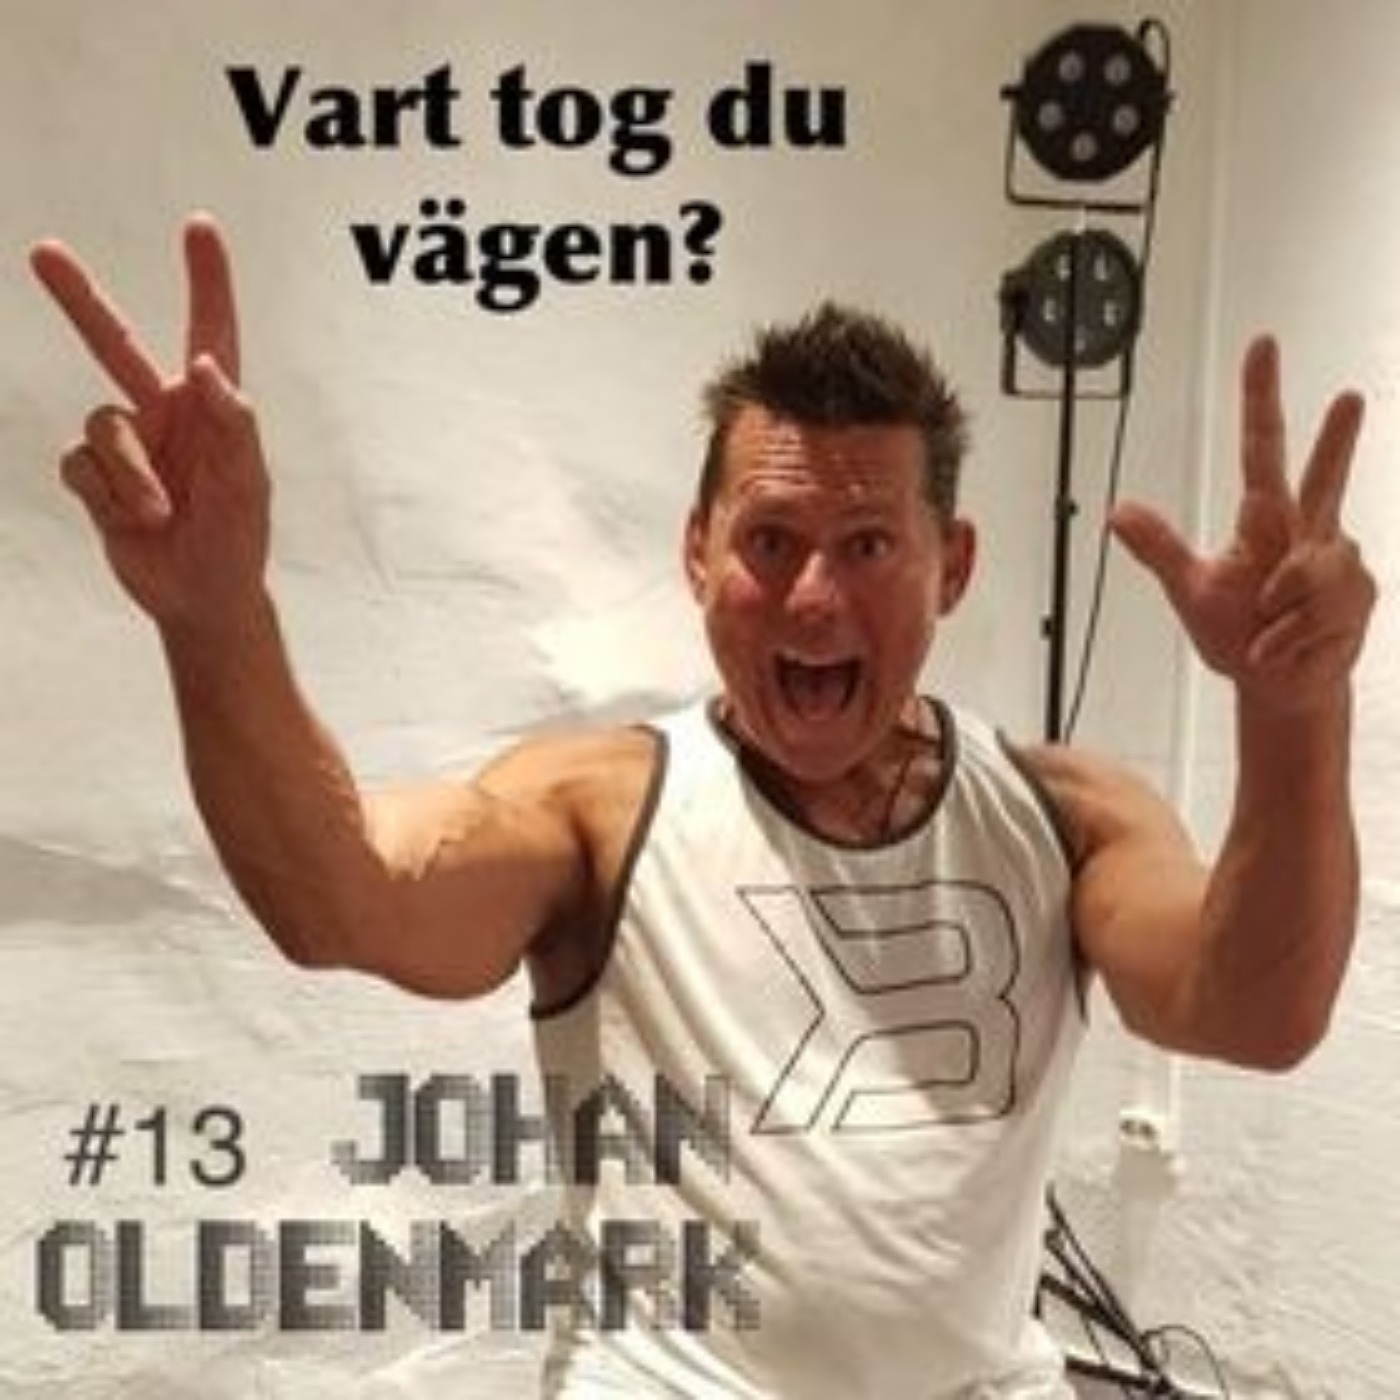 #13 Johan Oldenmark (Gladiatorerna)